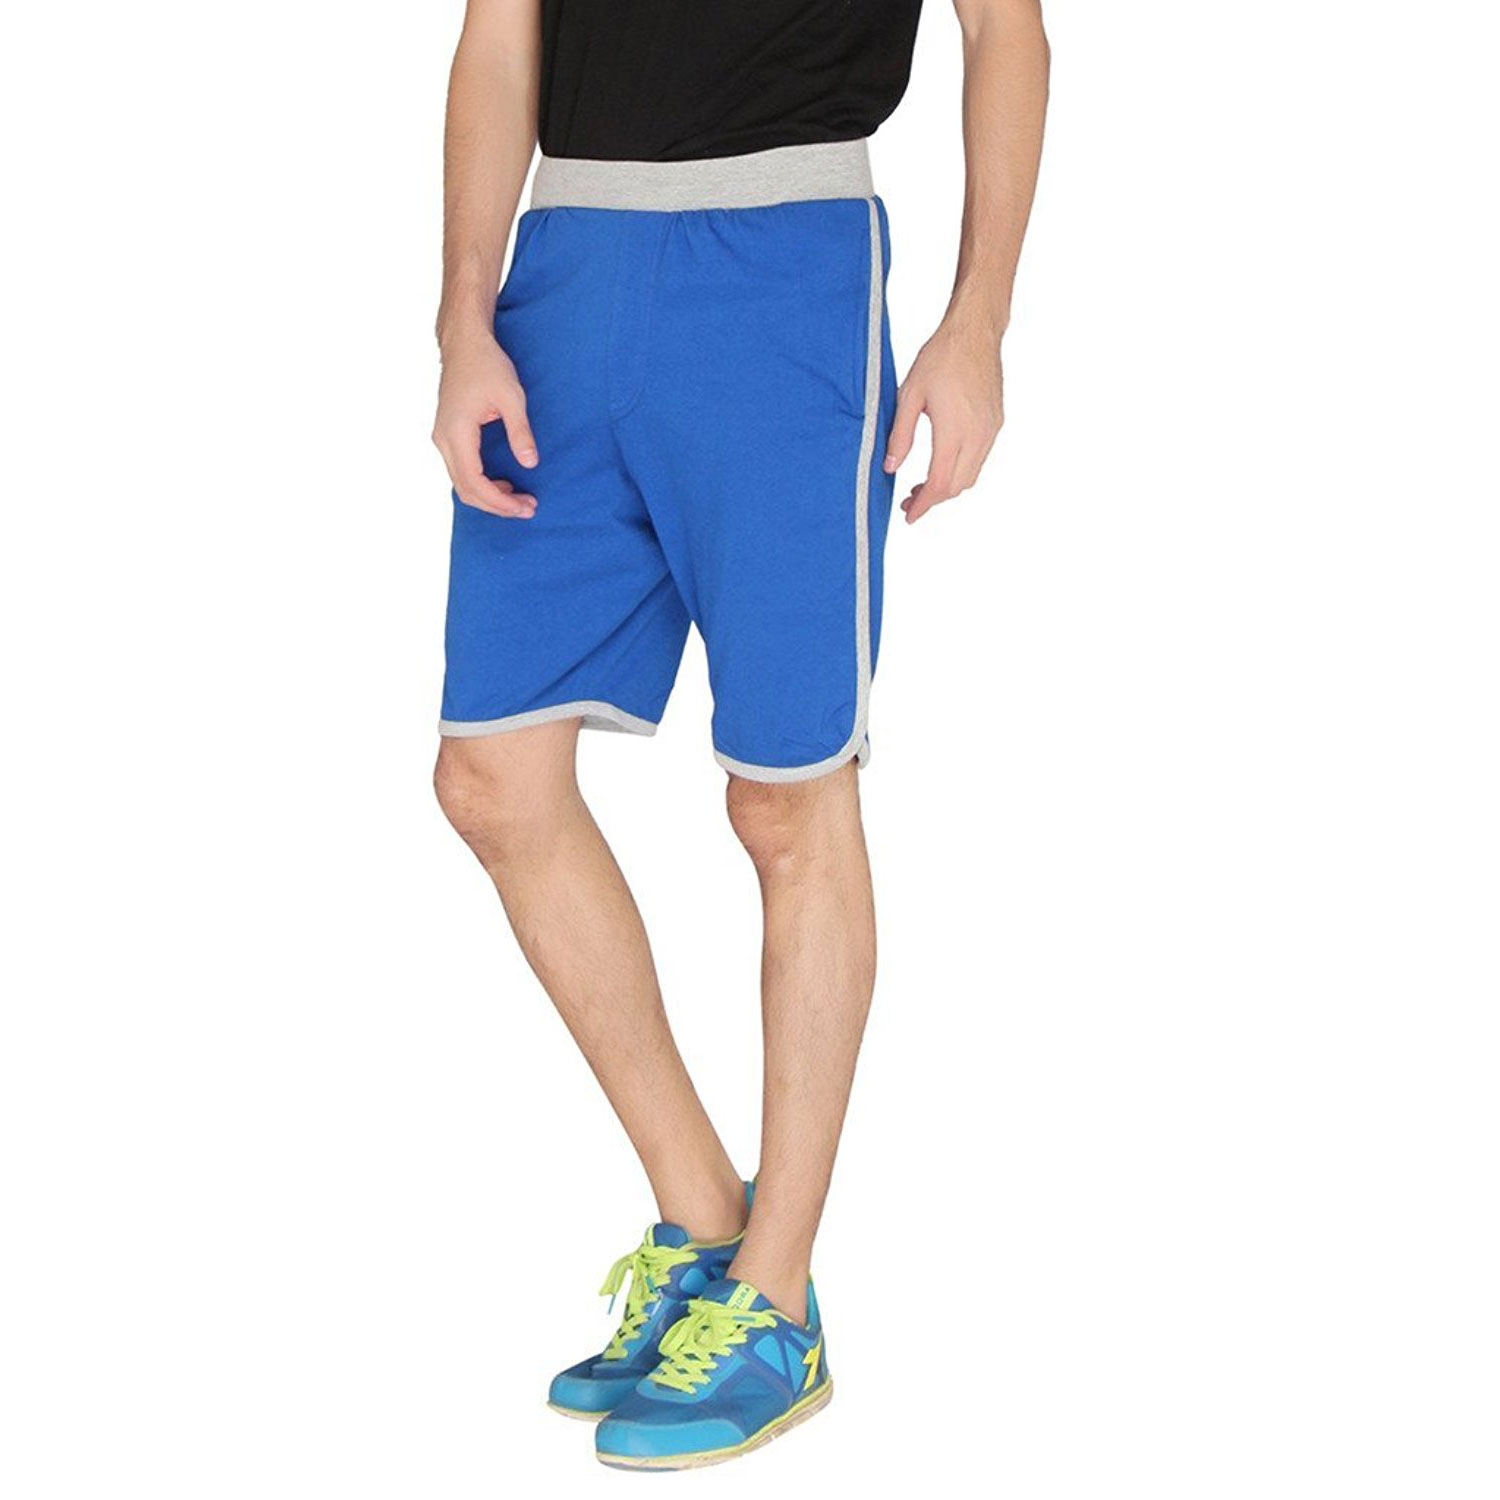   LUCfashion Men's Exclusive Premium Fashionable Sports Shorts